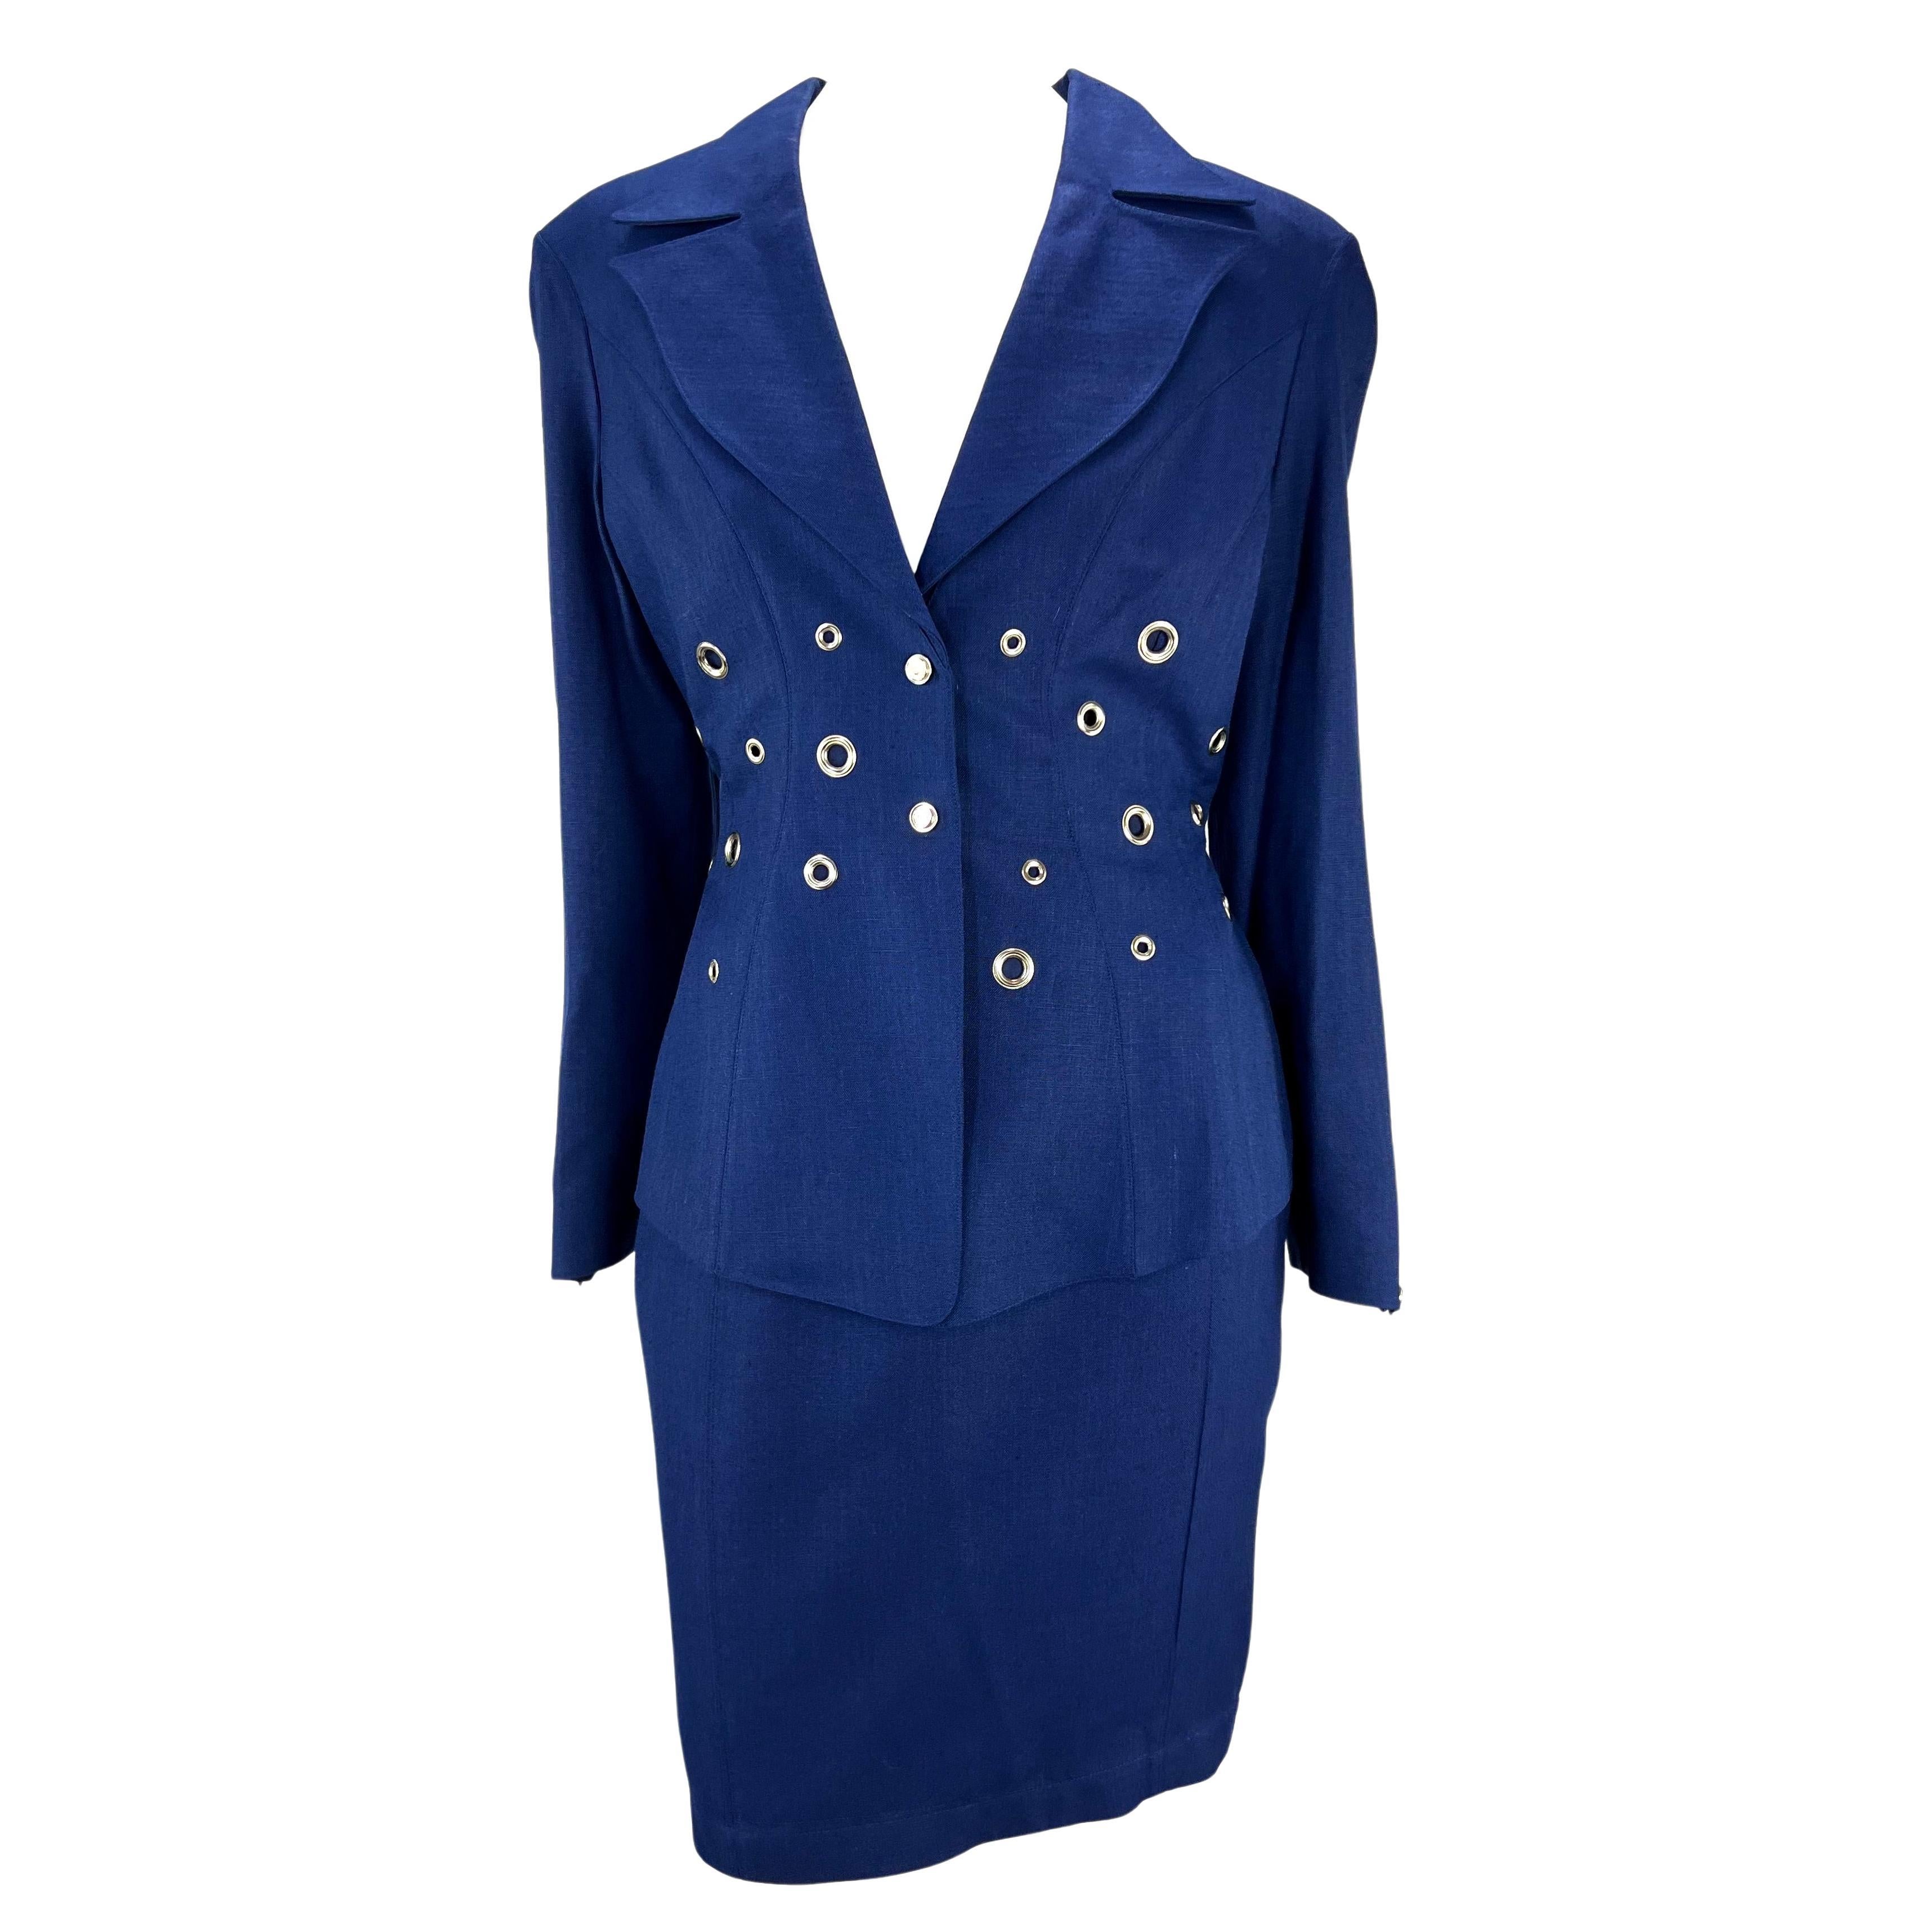 Vintage Rafael Houndstooth Skirt Suit Set Blazer Jacket Button Up Deadstock Nwt Denbiezerd Be